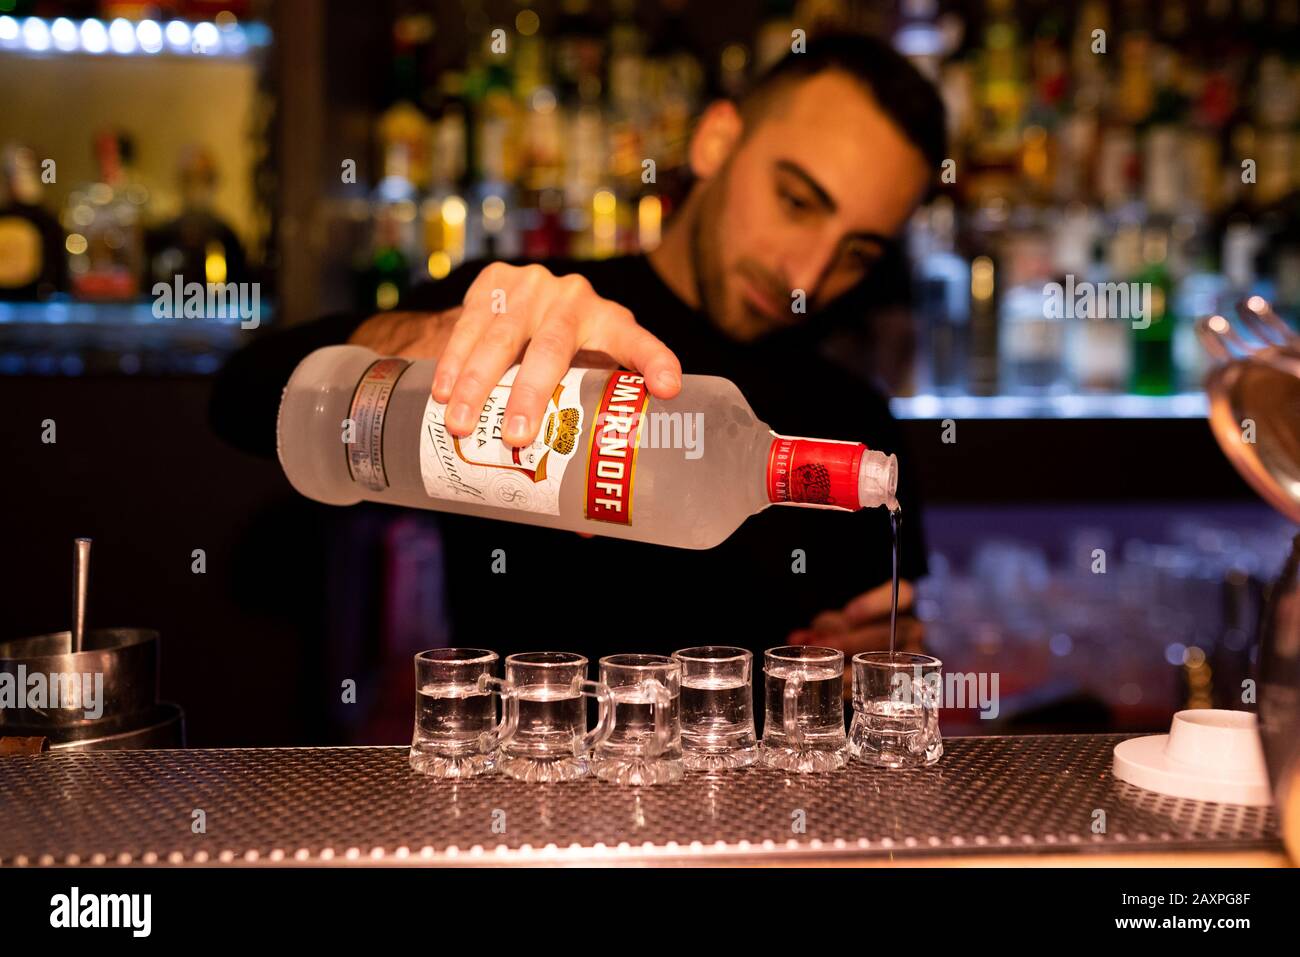 London, Uk - 20 january 2020: young bartender serving glasses shots of  smirnoff vodka inside a bar at night enjoying nightlife Stock Photo - Alamy